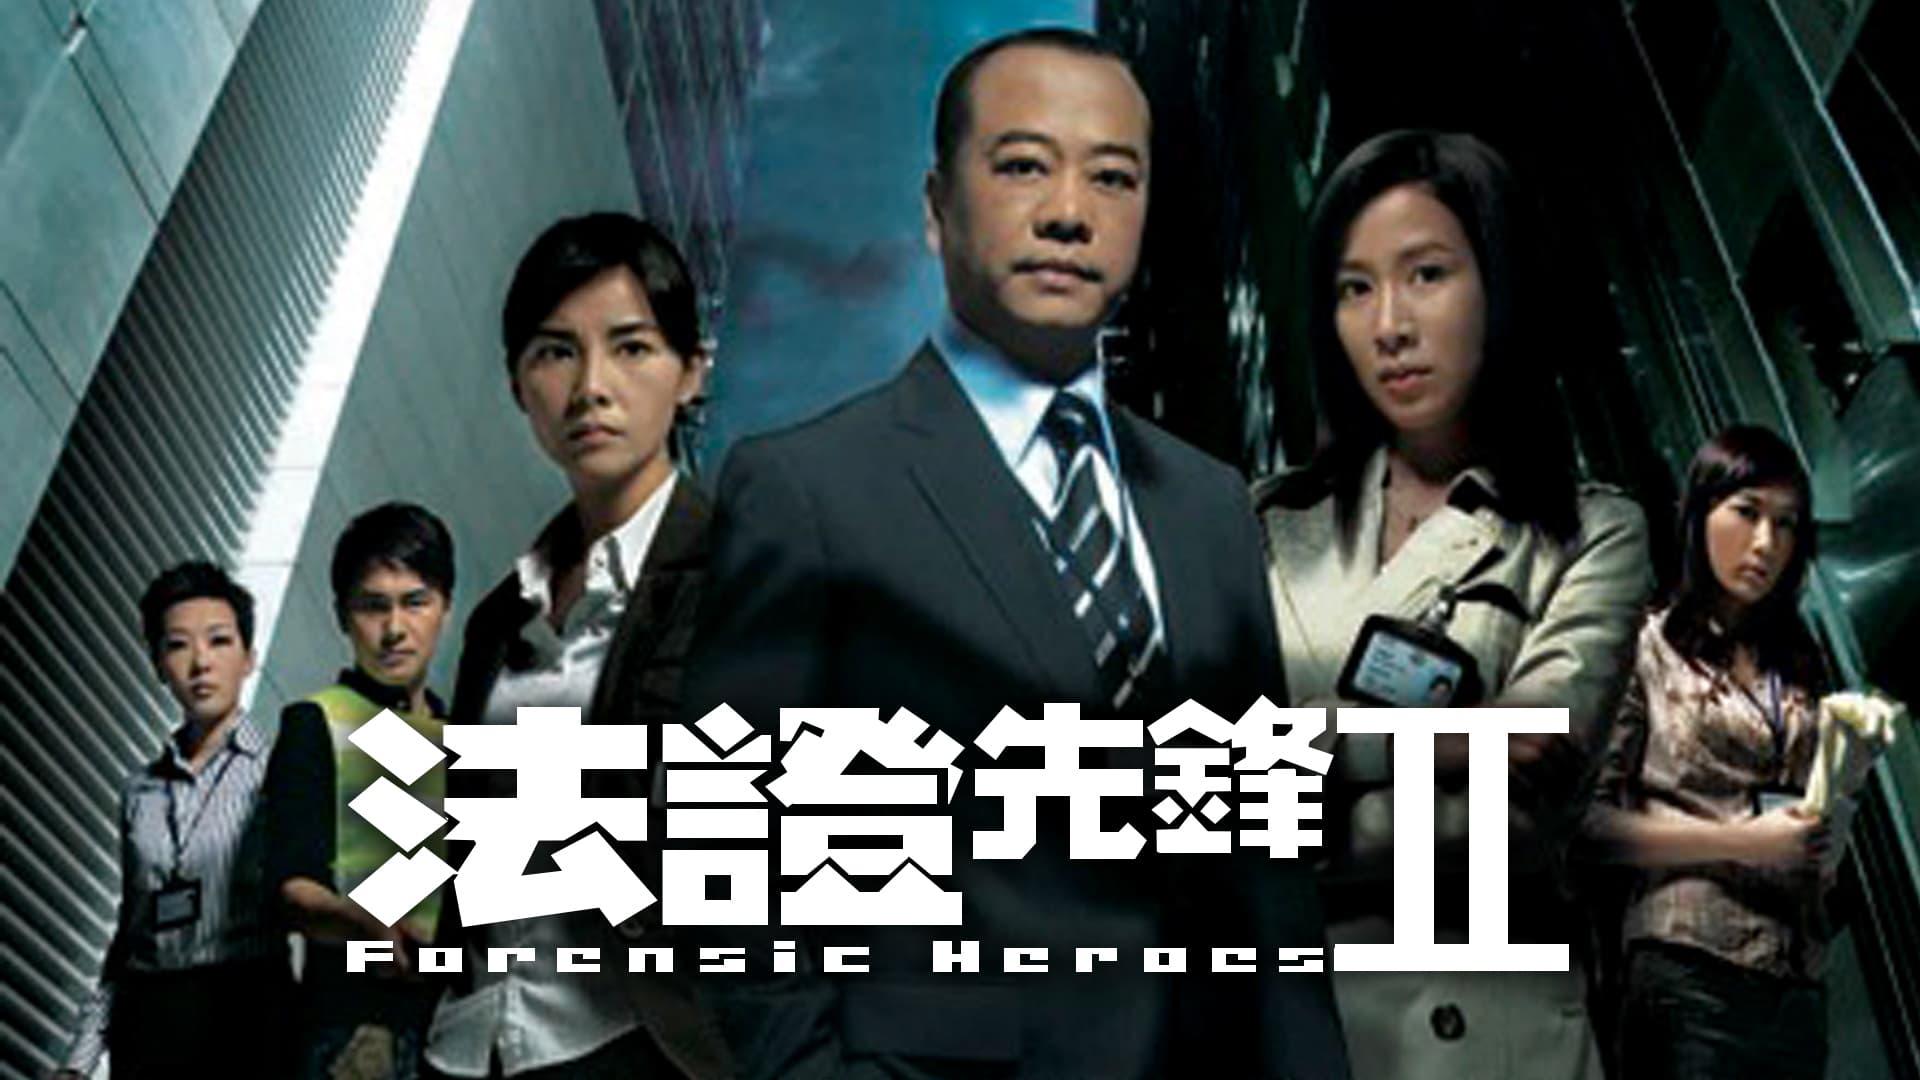 Forensic Heroes II backdrop